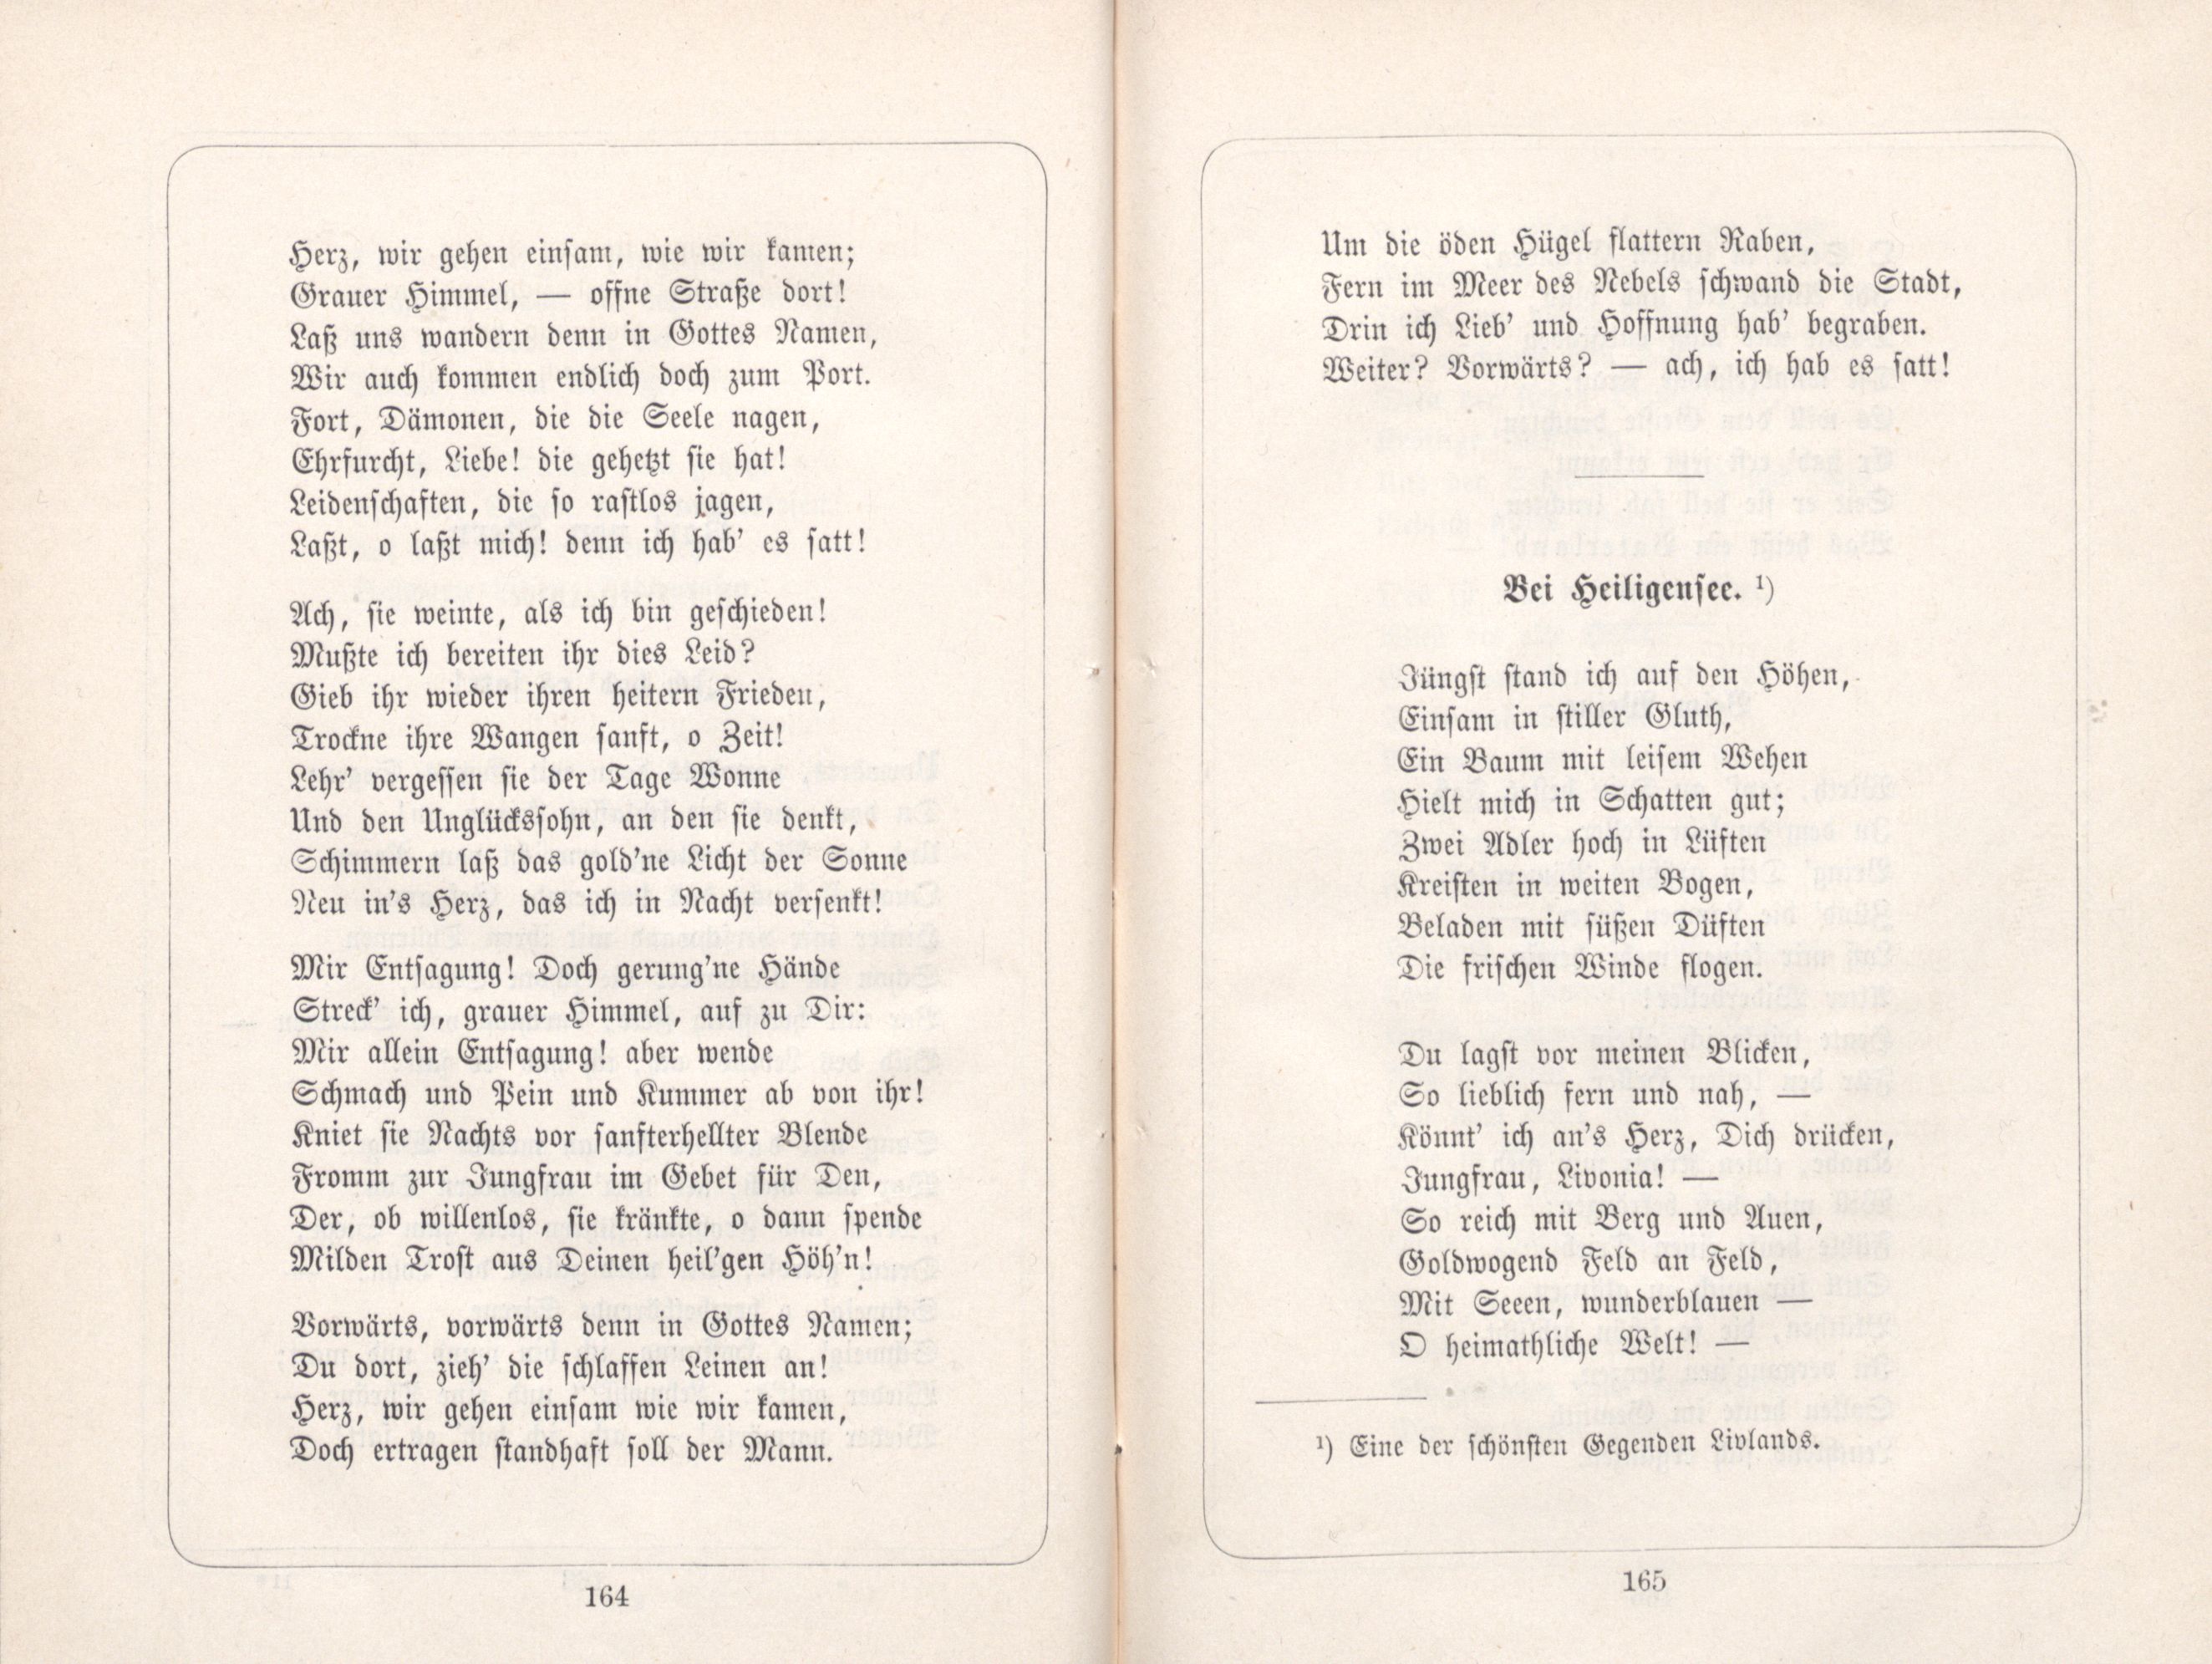 Bei Heiligensee (1885) | 1. (164-165) Main body of text